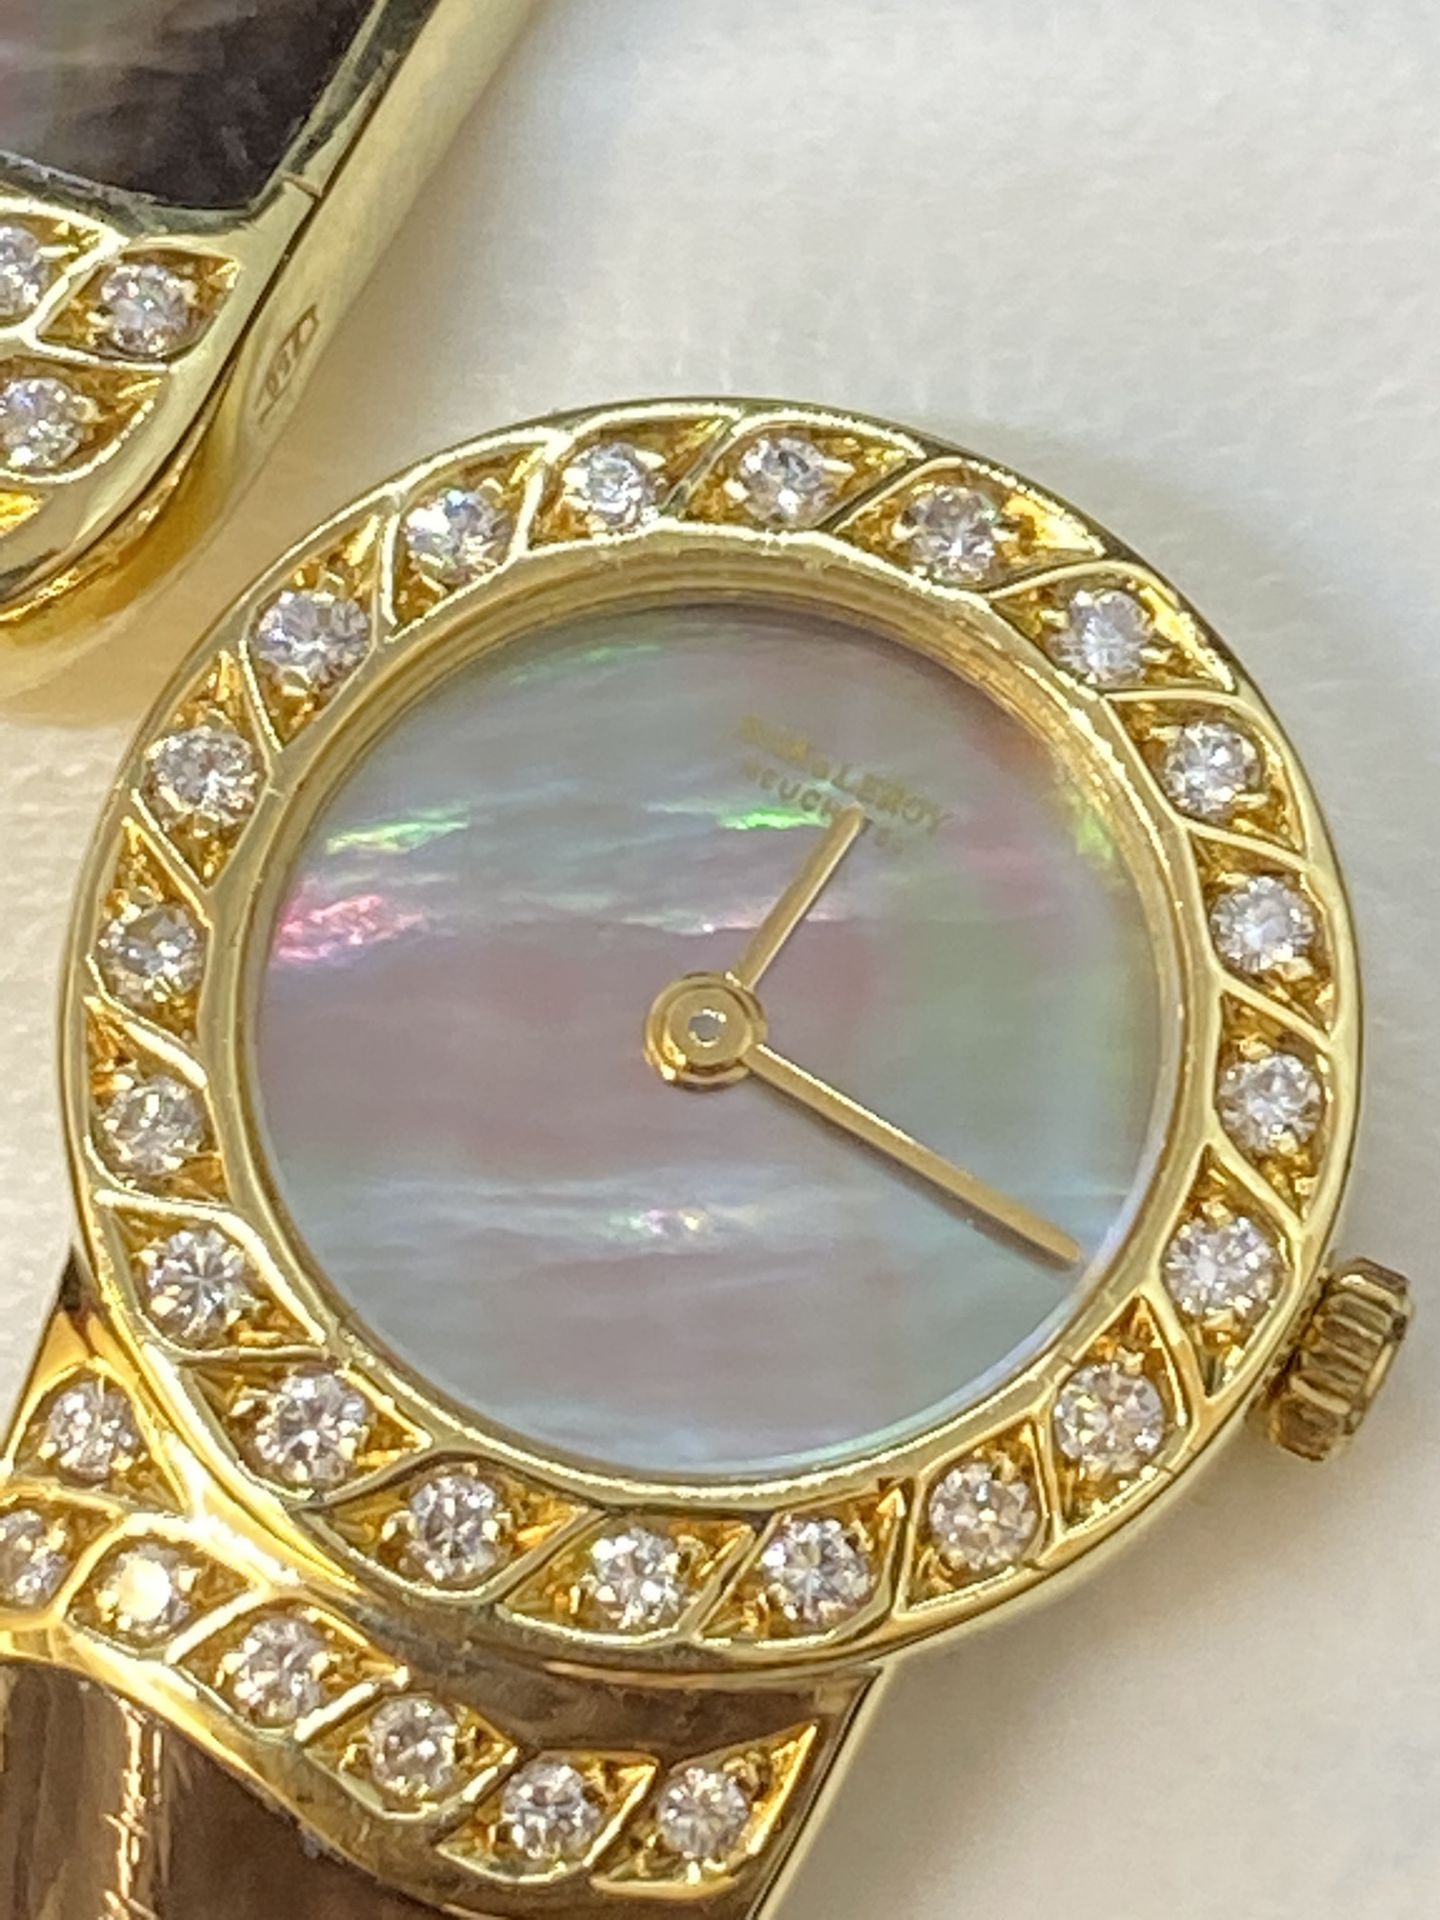 RARE BAK & LEROY GOLD DIAMOND SET WATCH - Image 4 of 8